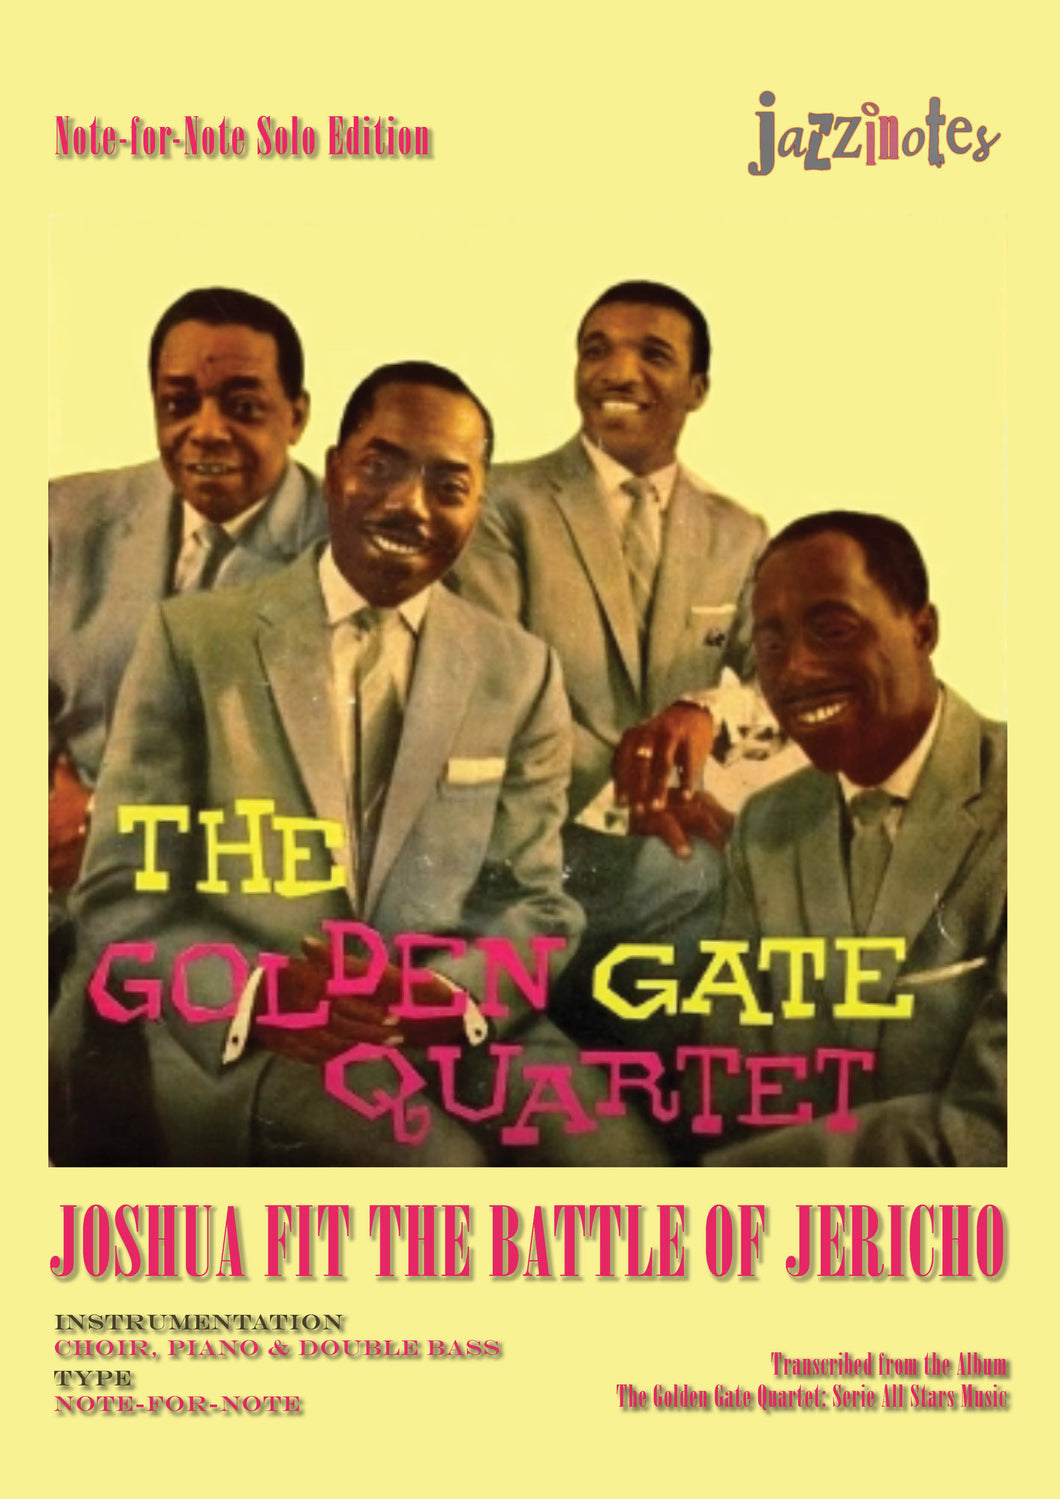 Golden Gate Quartet: Joshua Fit The Battle Of Jericho - Sheet Music Download